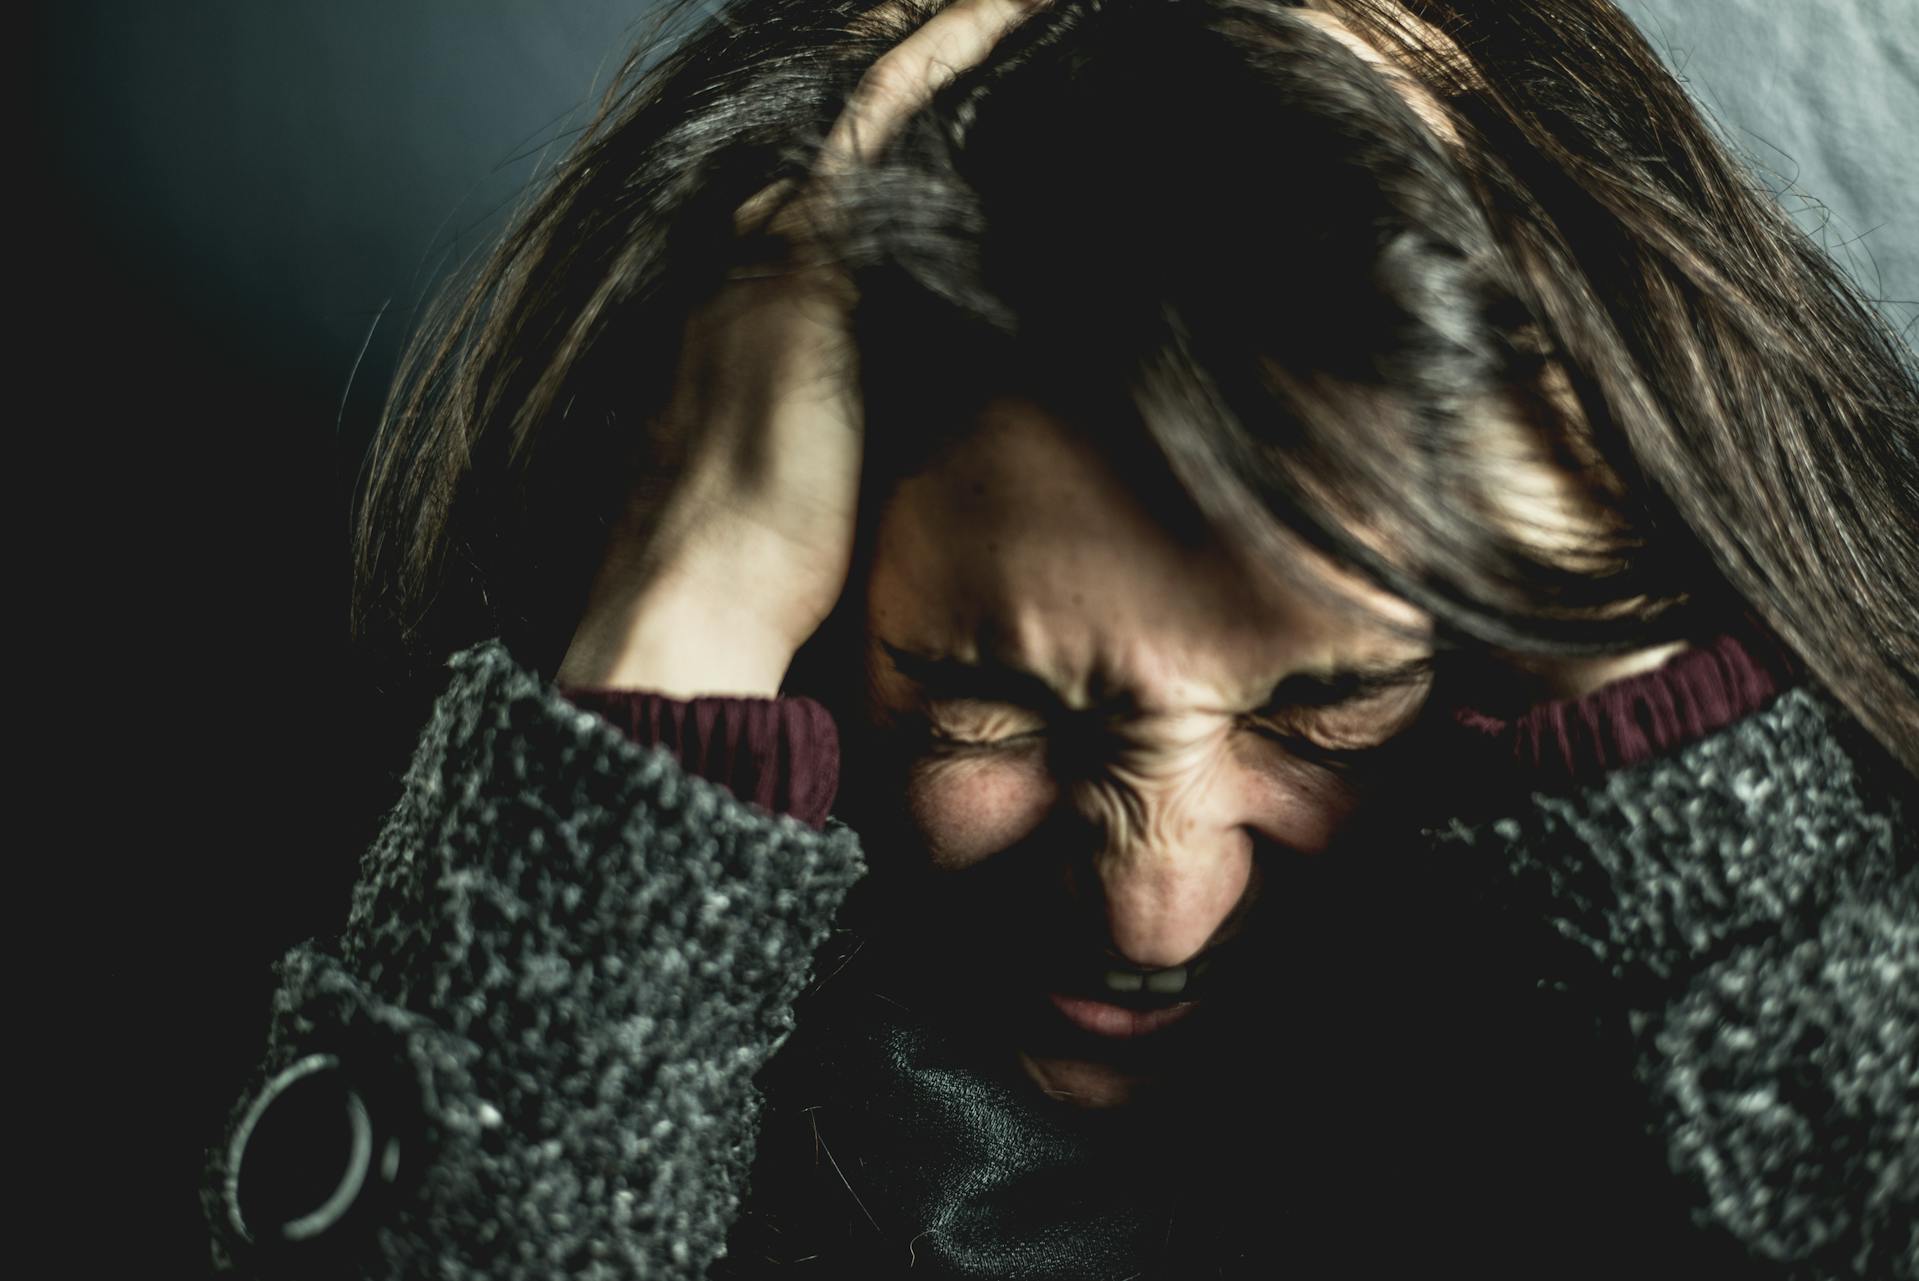 A deeply upset woman | Source: Pexels